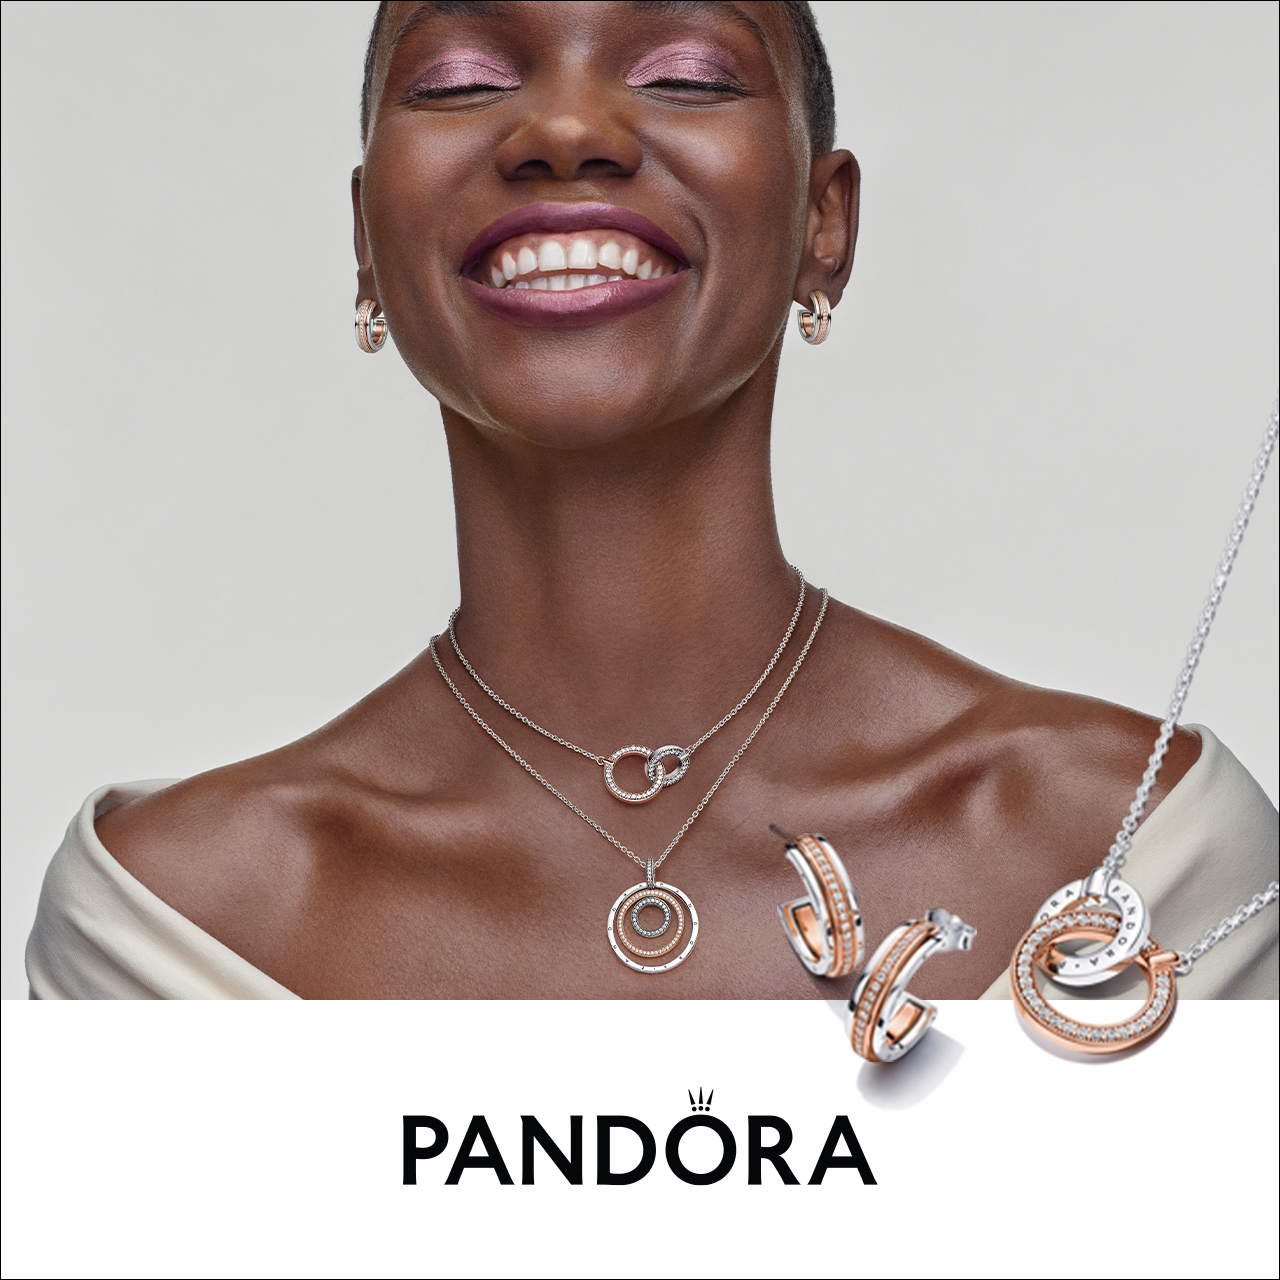 Pandora Campaign 105 Pandora Signature two tone pieces to love and layer. EN 1280x1280 1